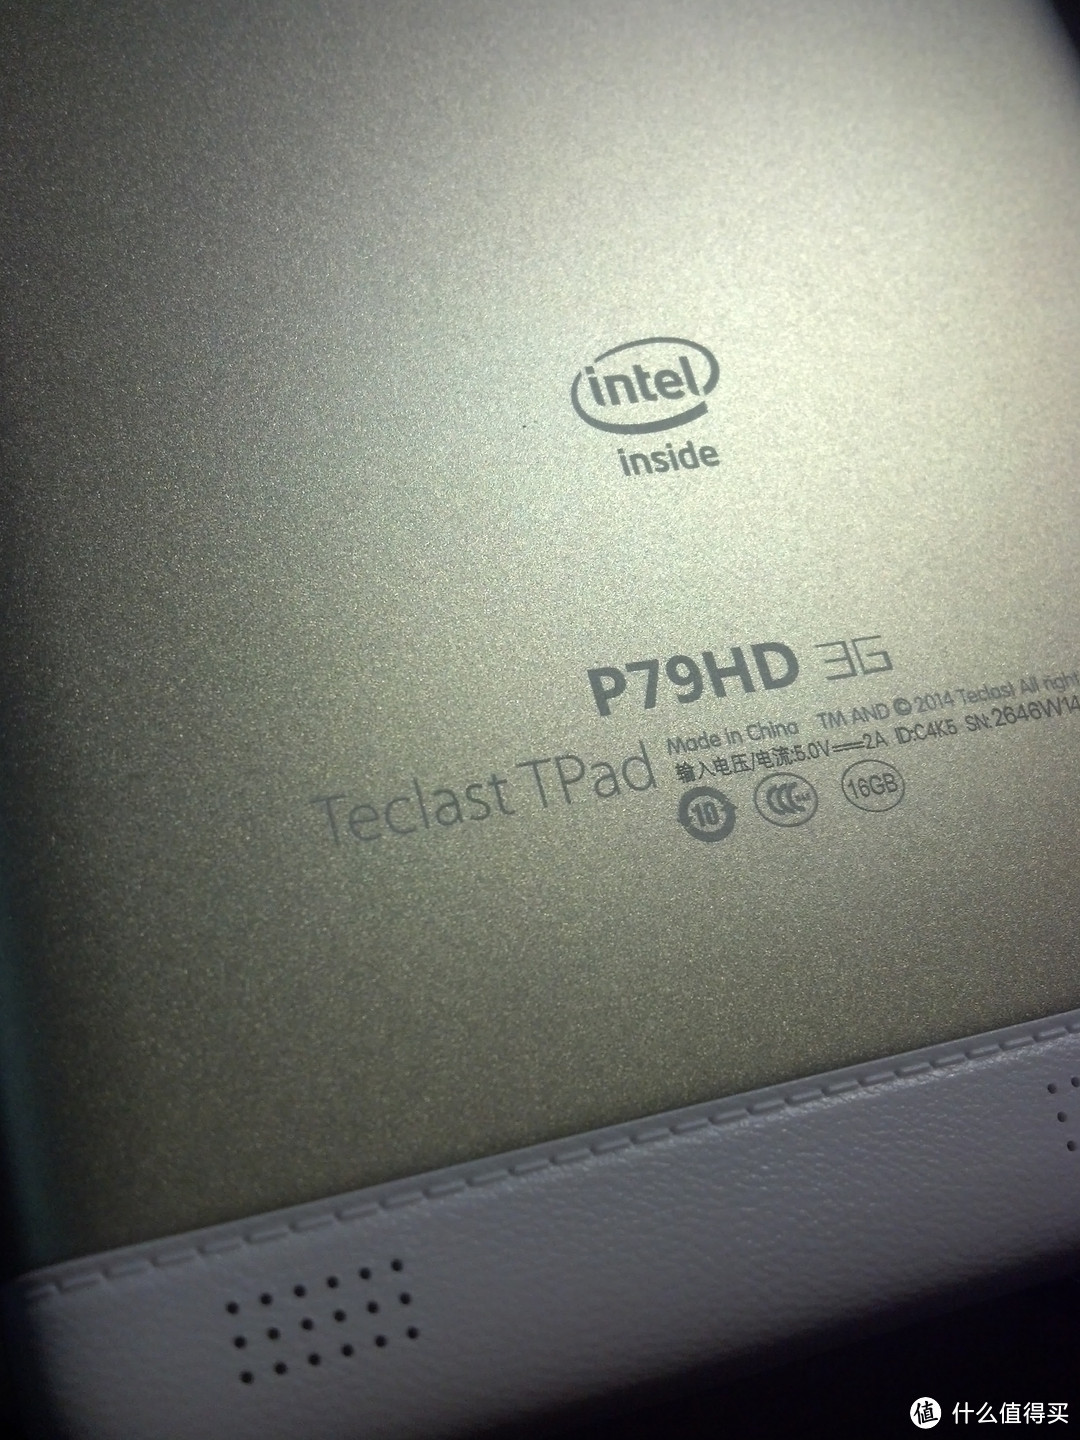 Teclast 台电 P79HD 3G 大神 7寸通话平板